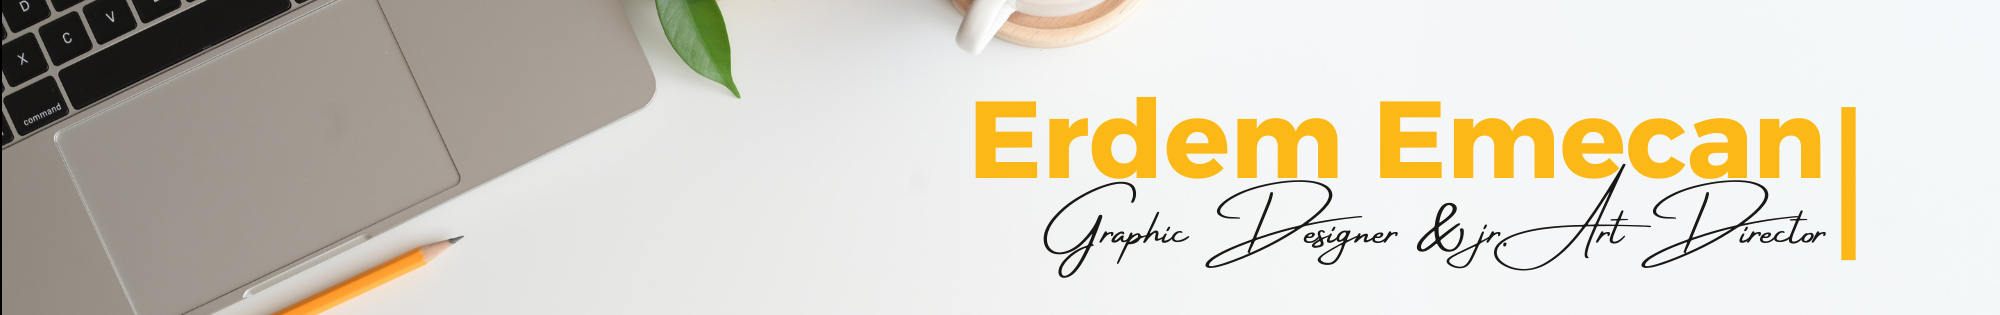 Erdem Emecan's profile banner